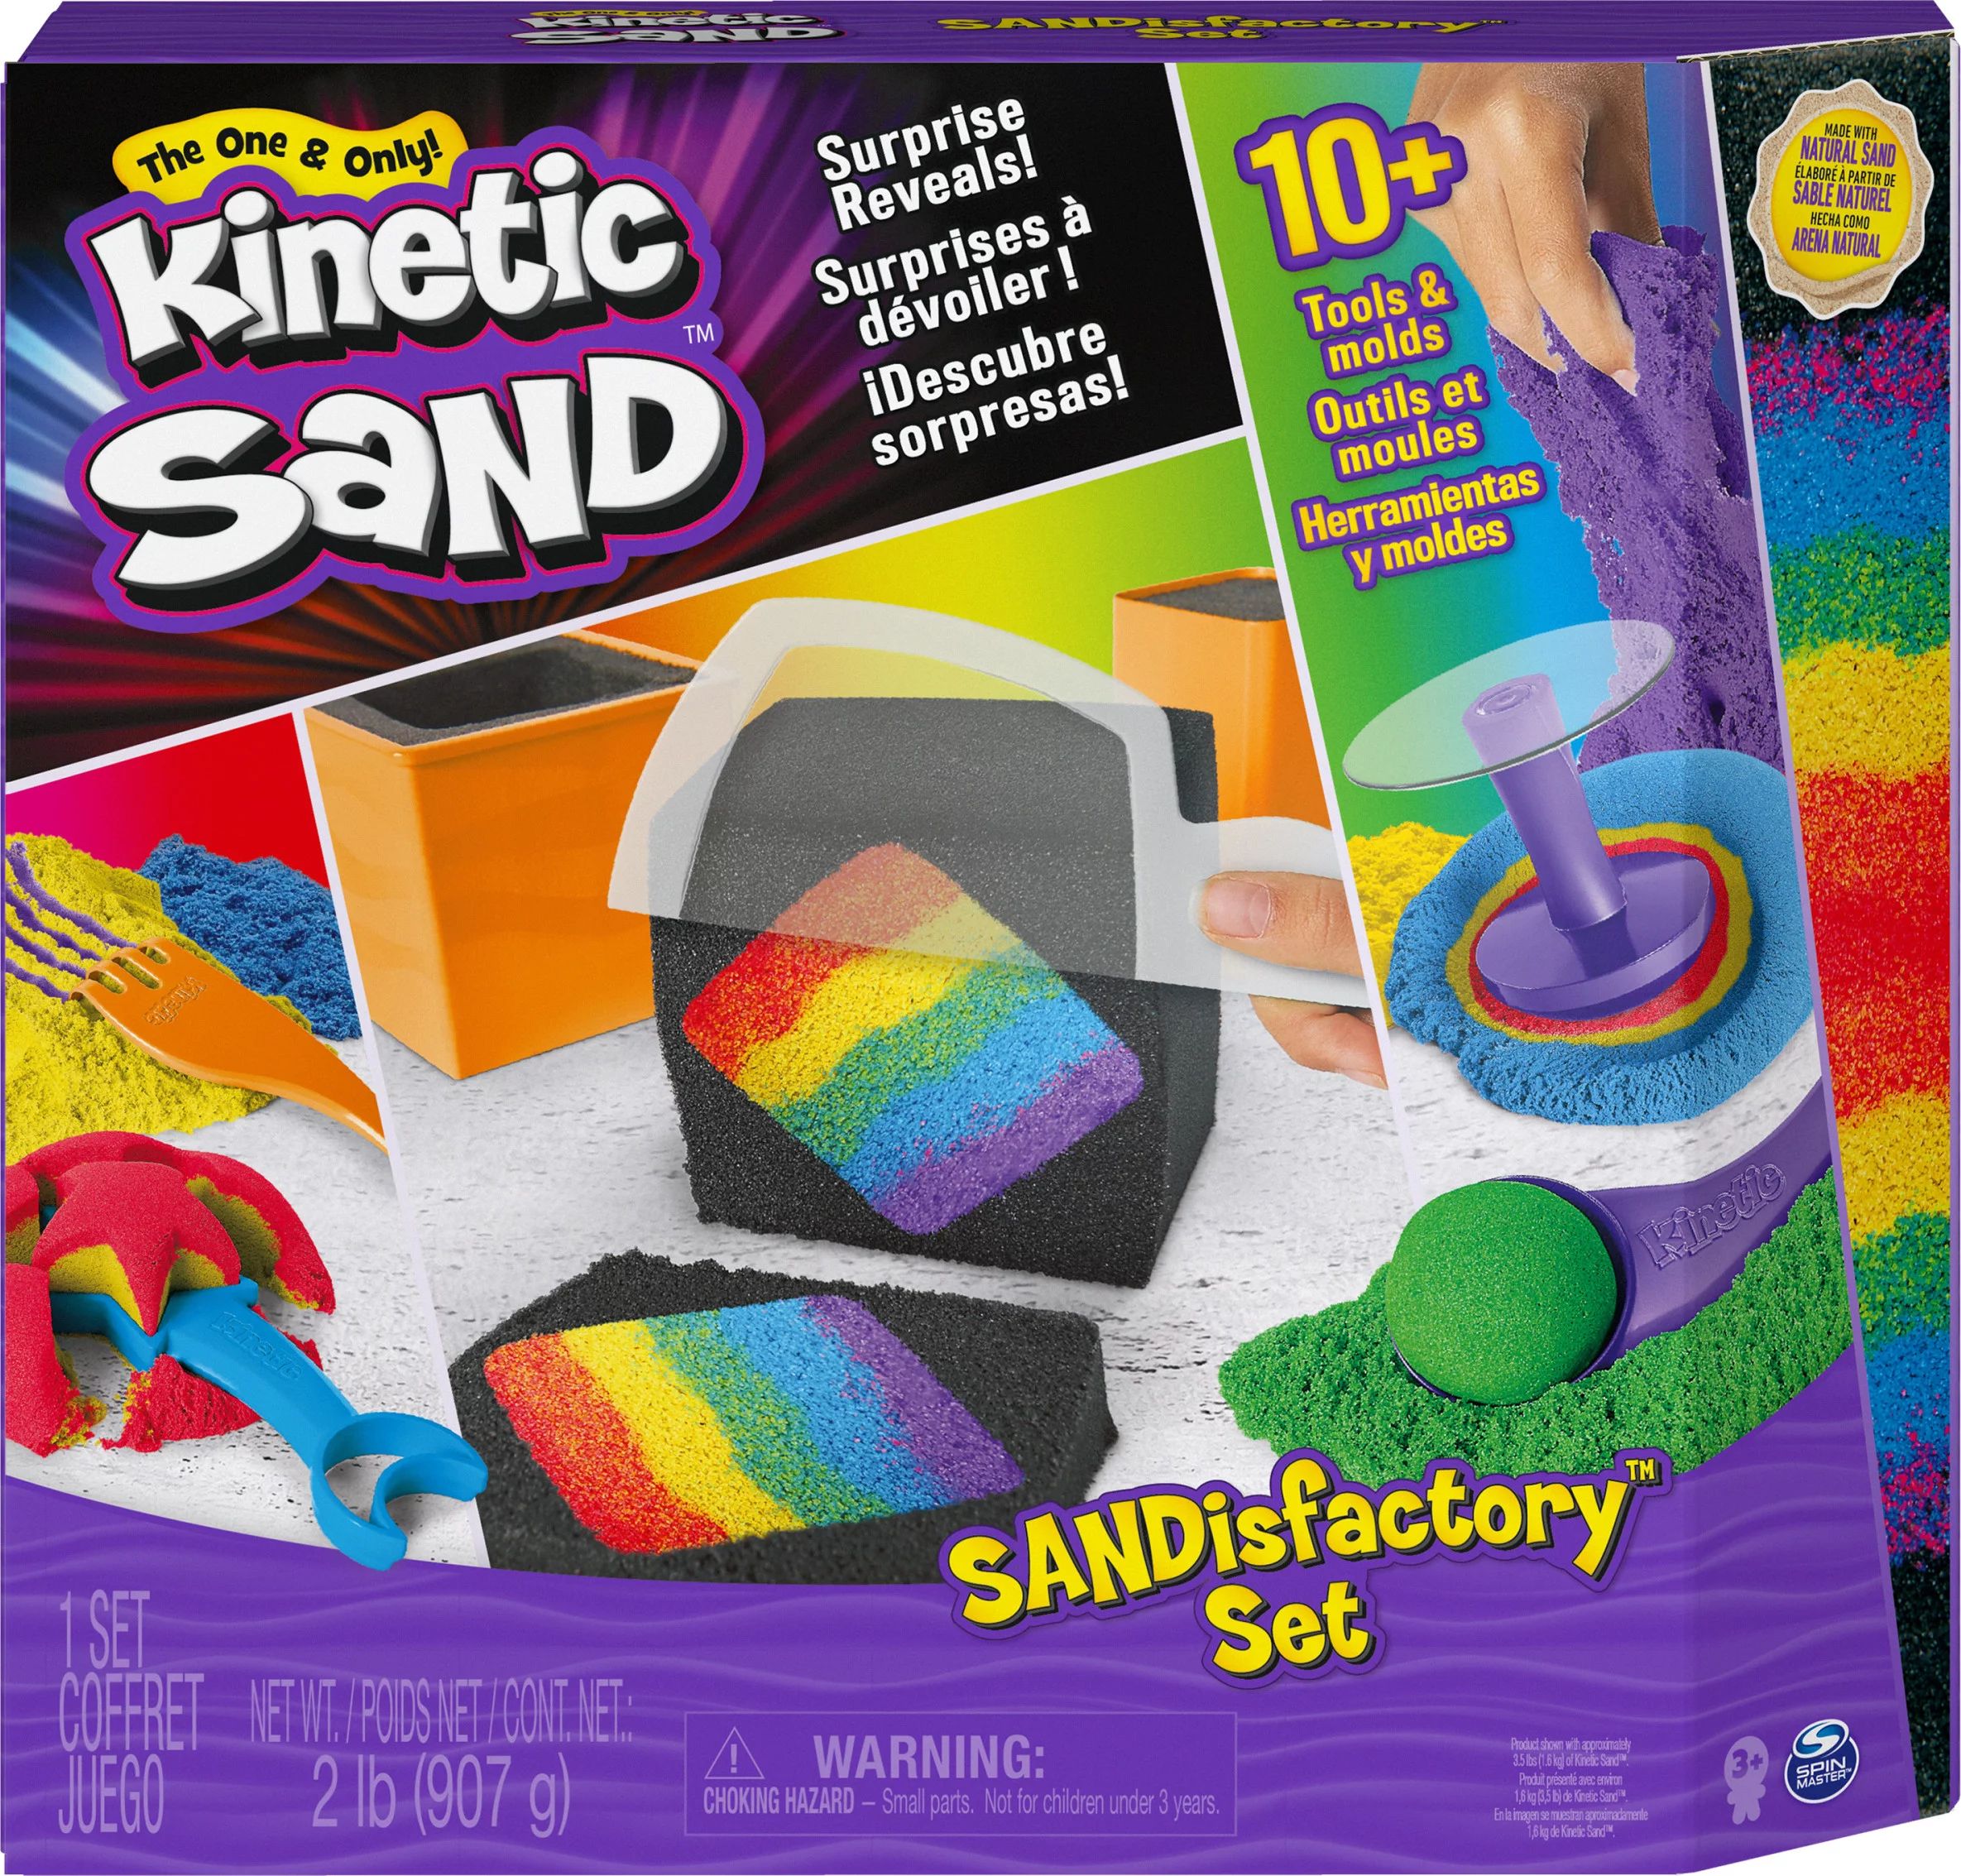 Kinetic Sand Sandisfactory Set with 2lbs of Colored Kinetic Sand - Walmart.com | Walmart (US)